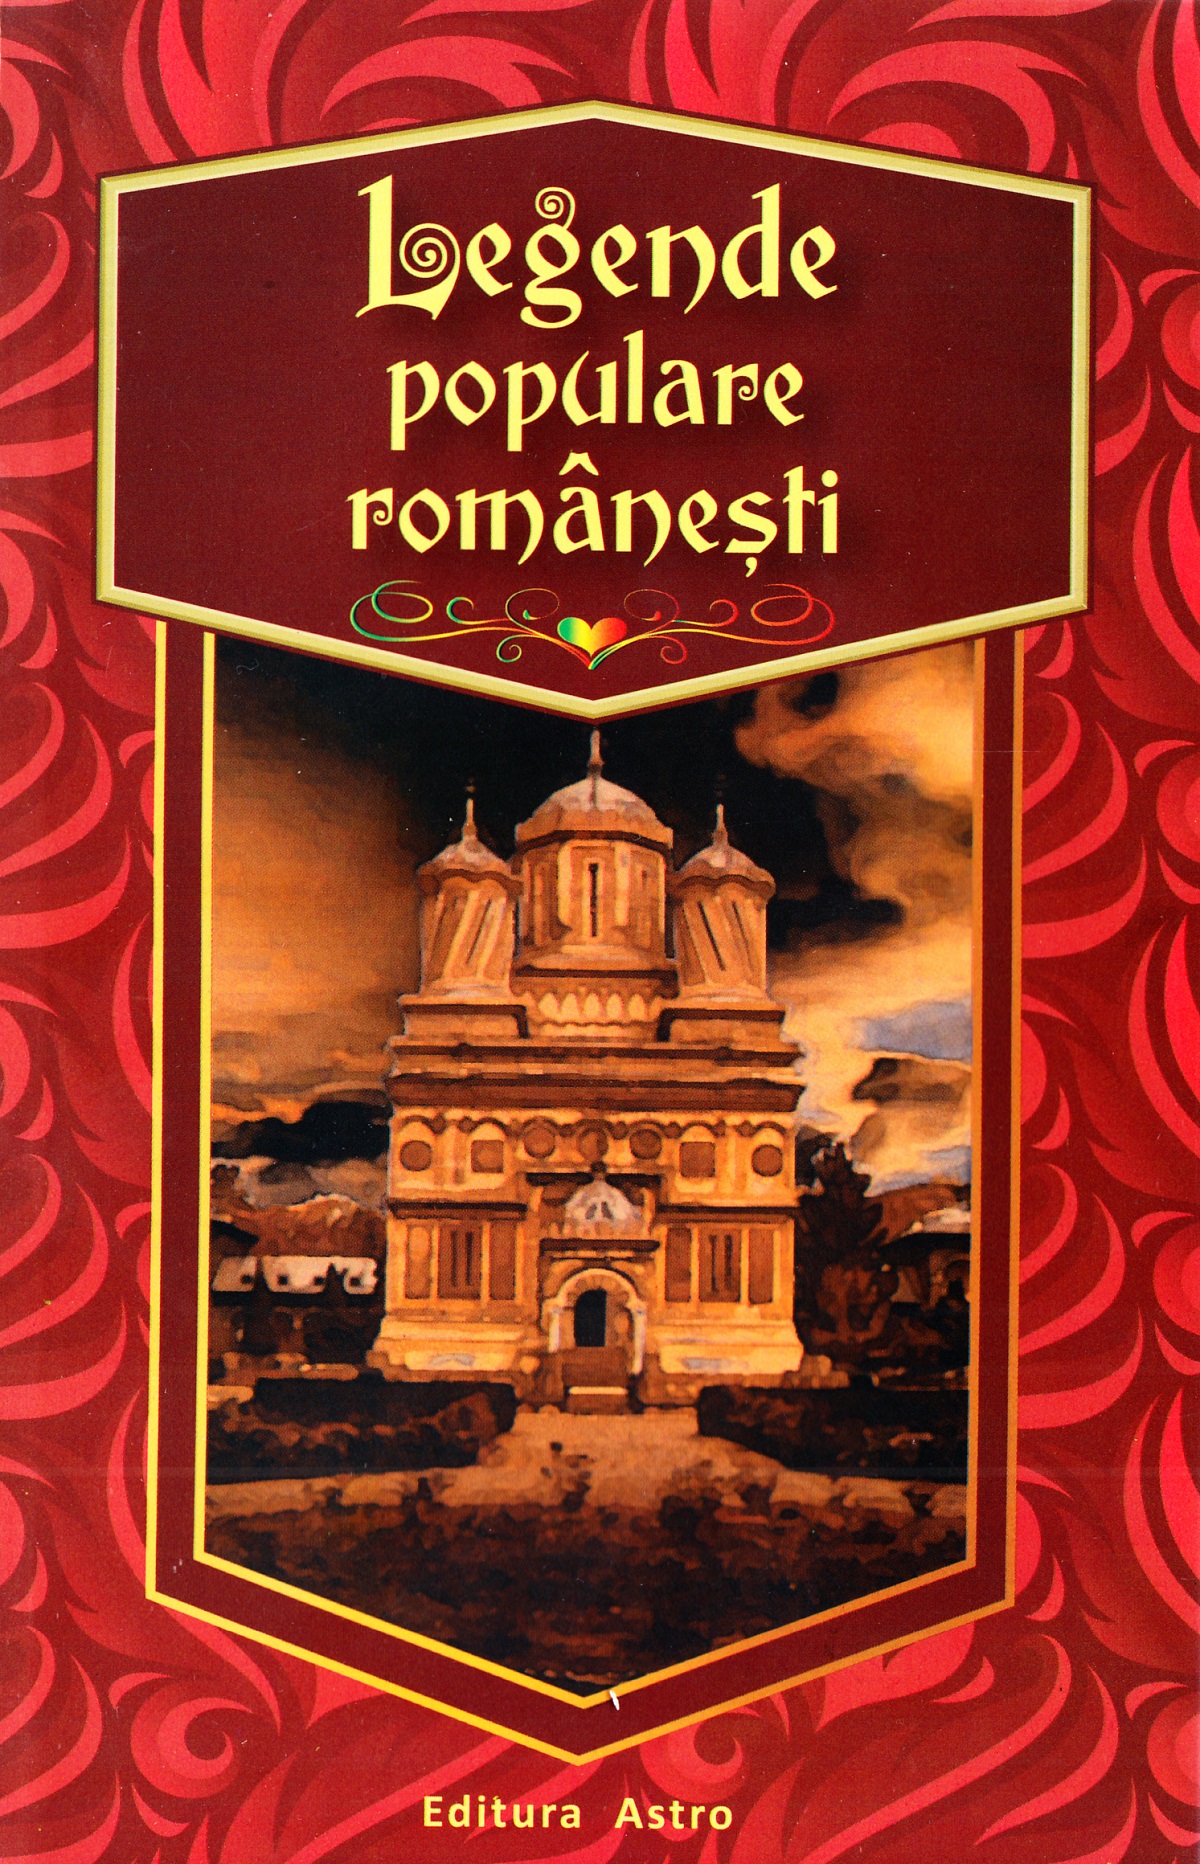 Pachet 3 carti: basme, balade, legende populare romanesti